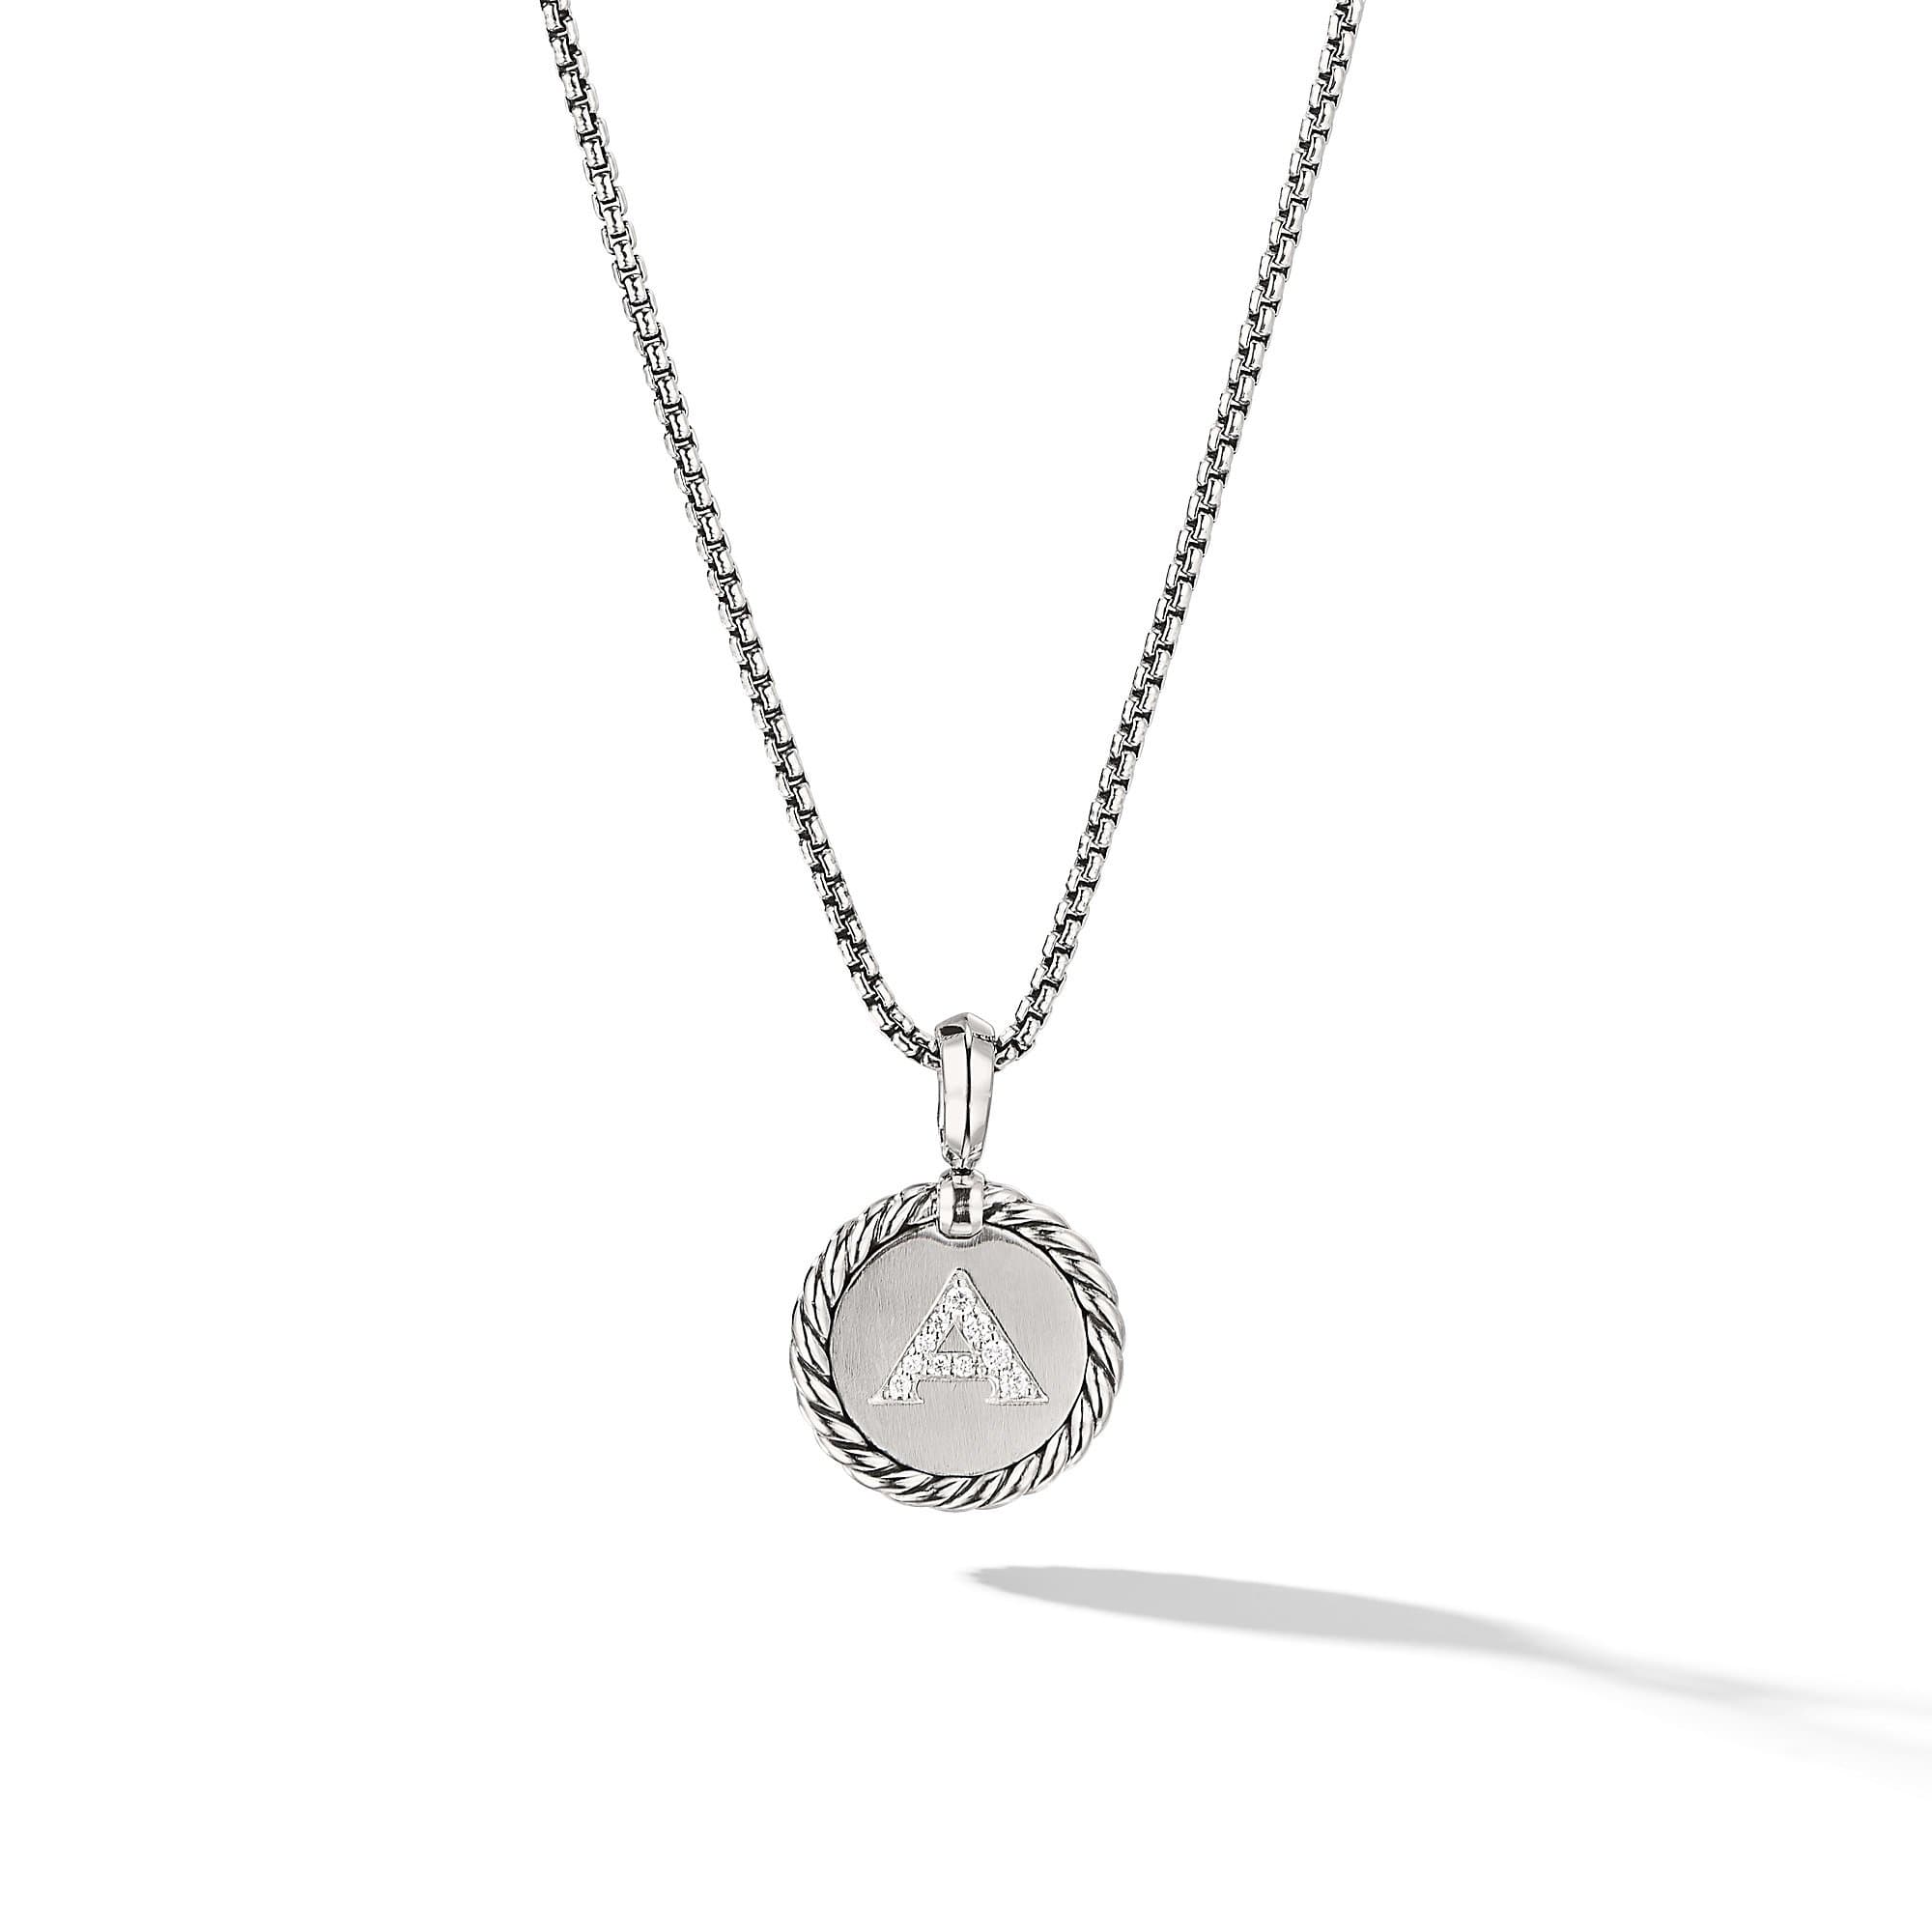 David Yurman A Initial Charm Necklace with Diamonds